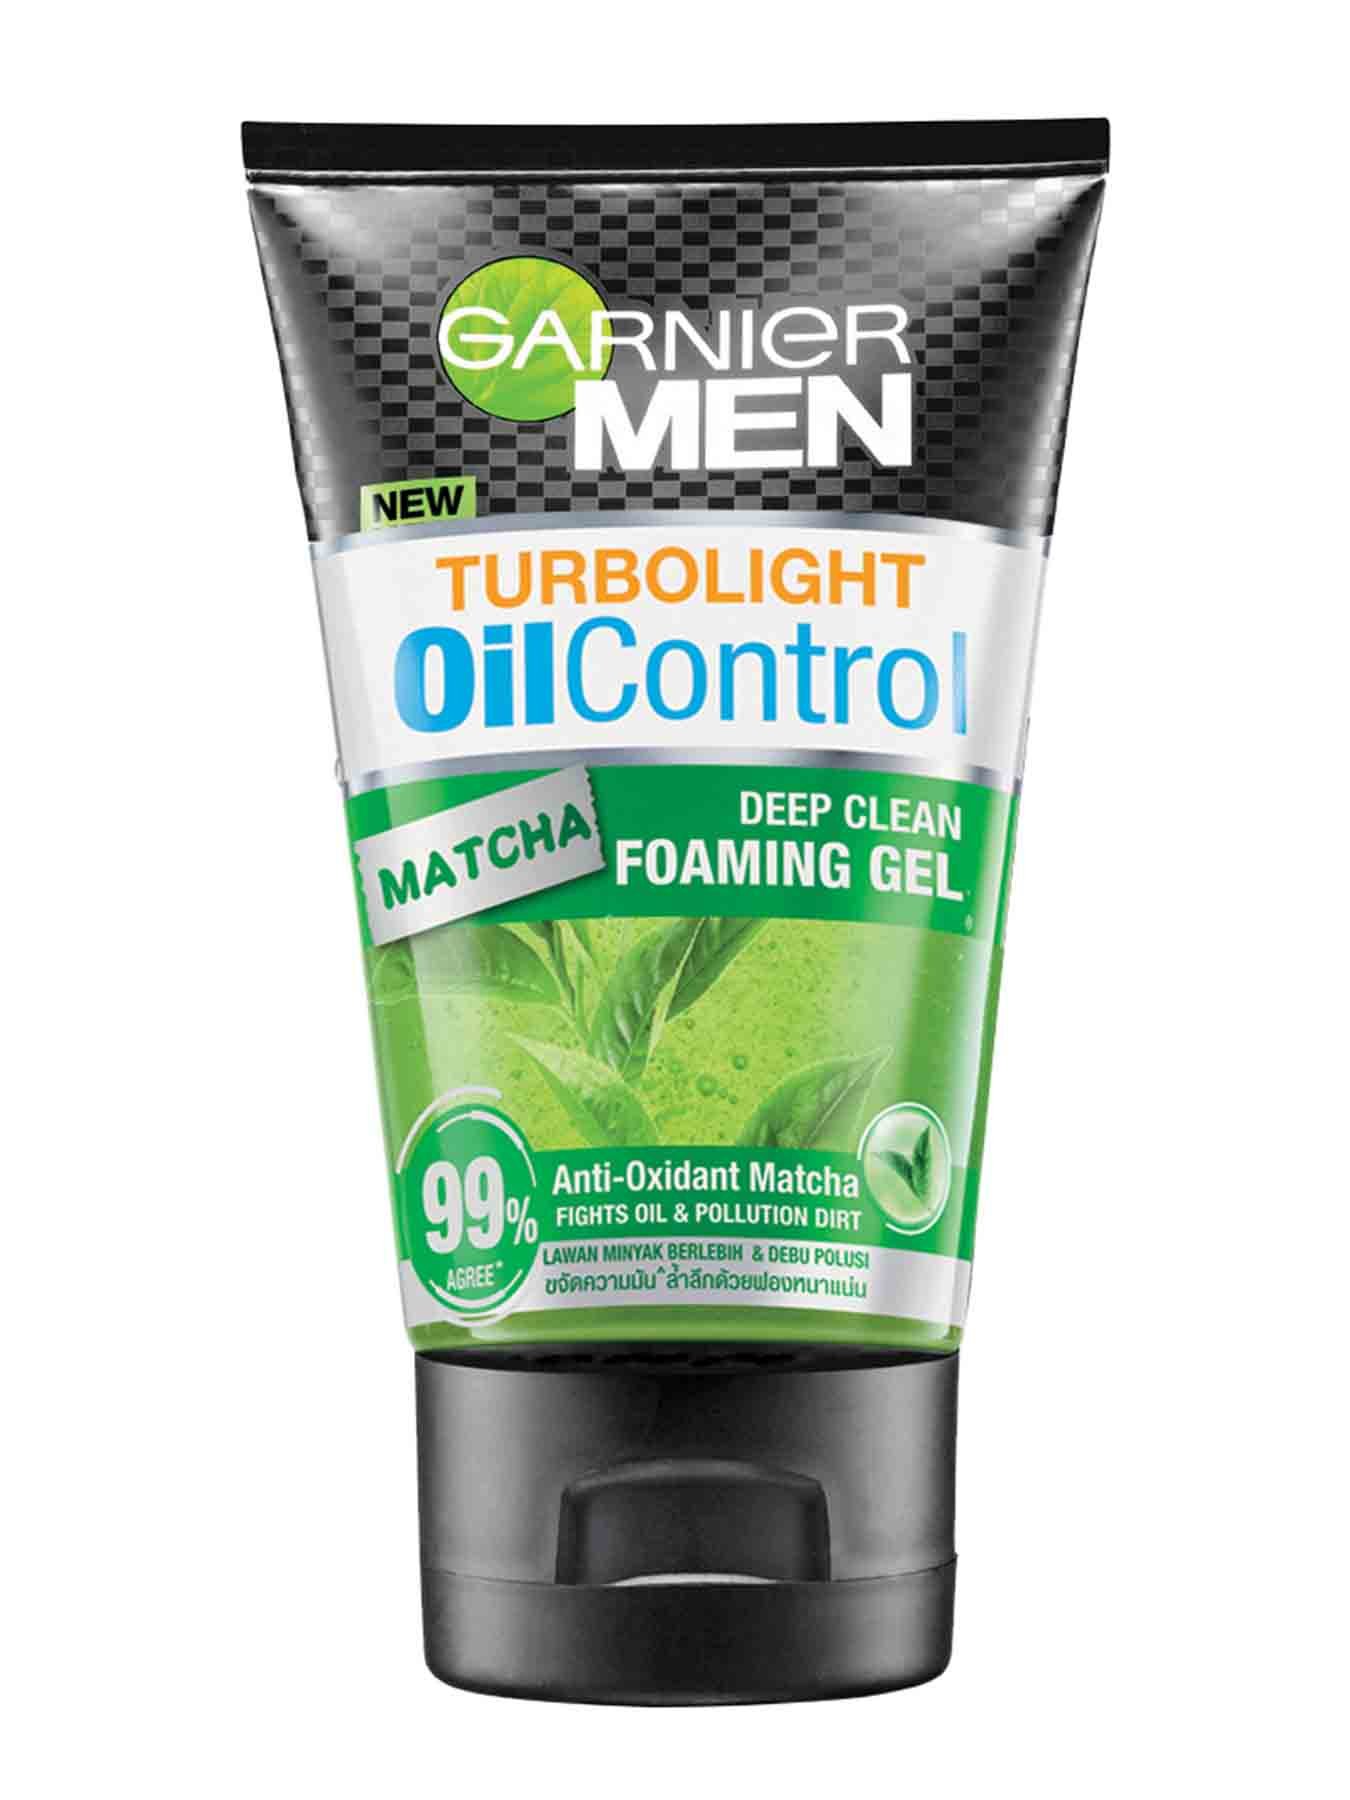 garnier men turbo light oil control matcha deep clean foaming gel